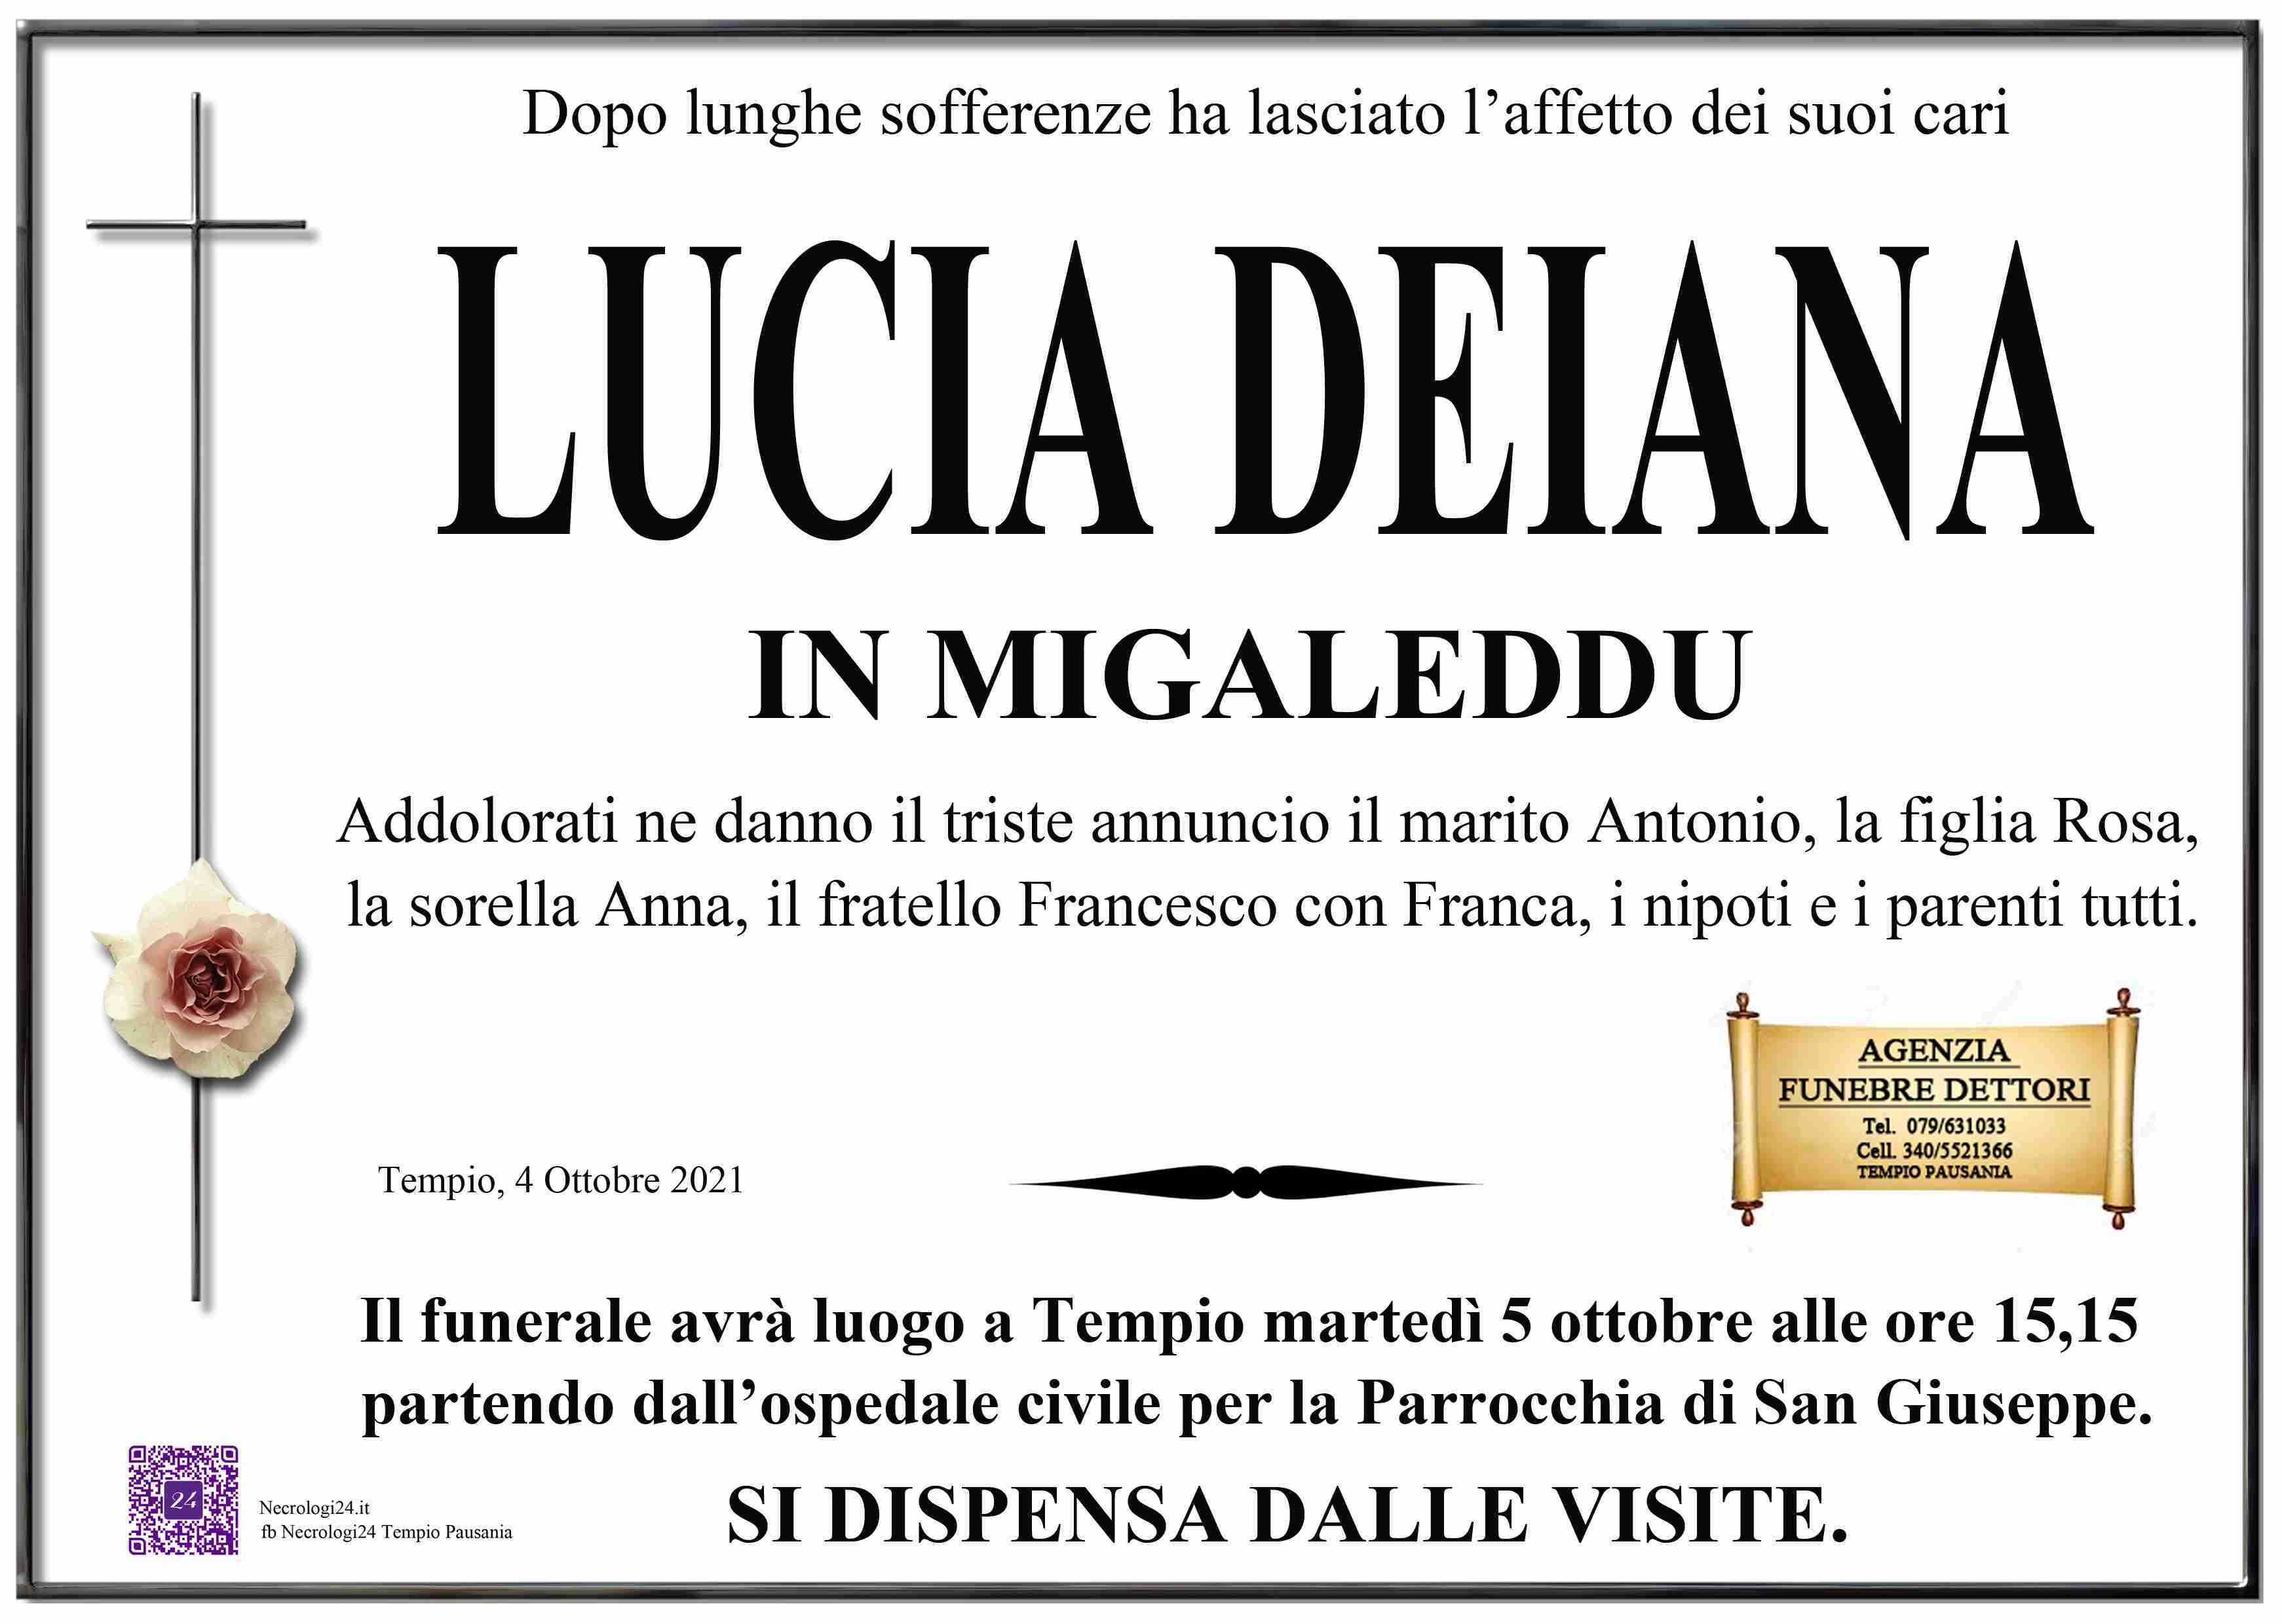 Lucia Deiana